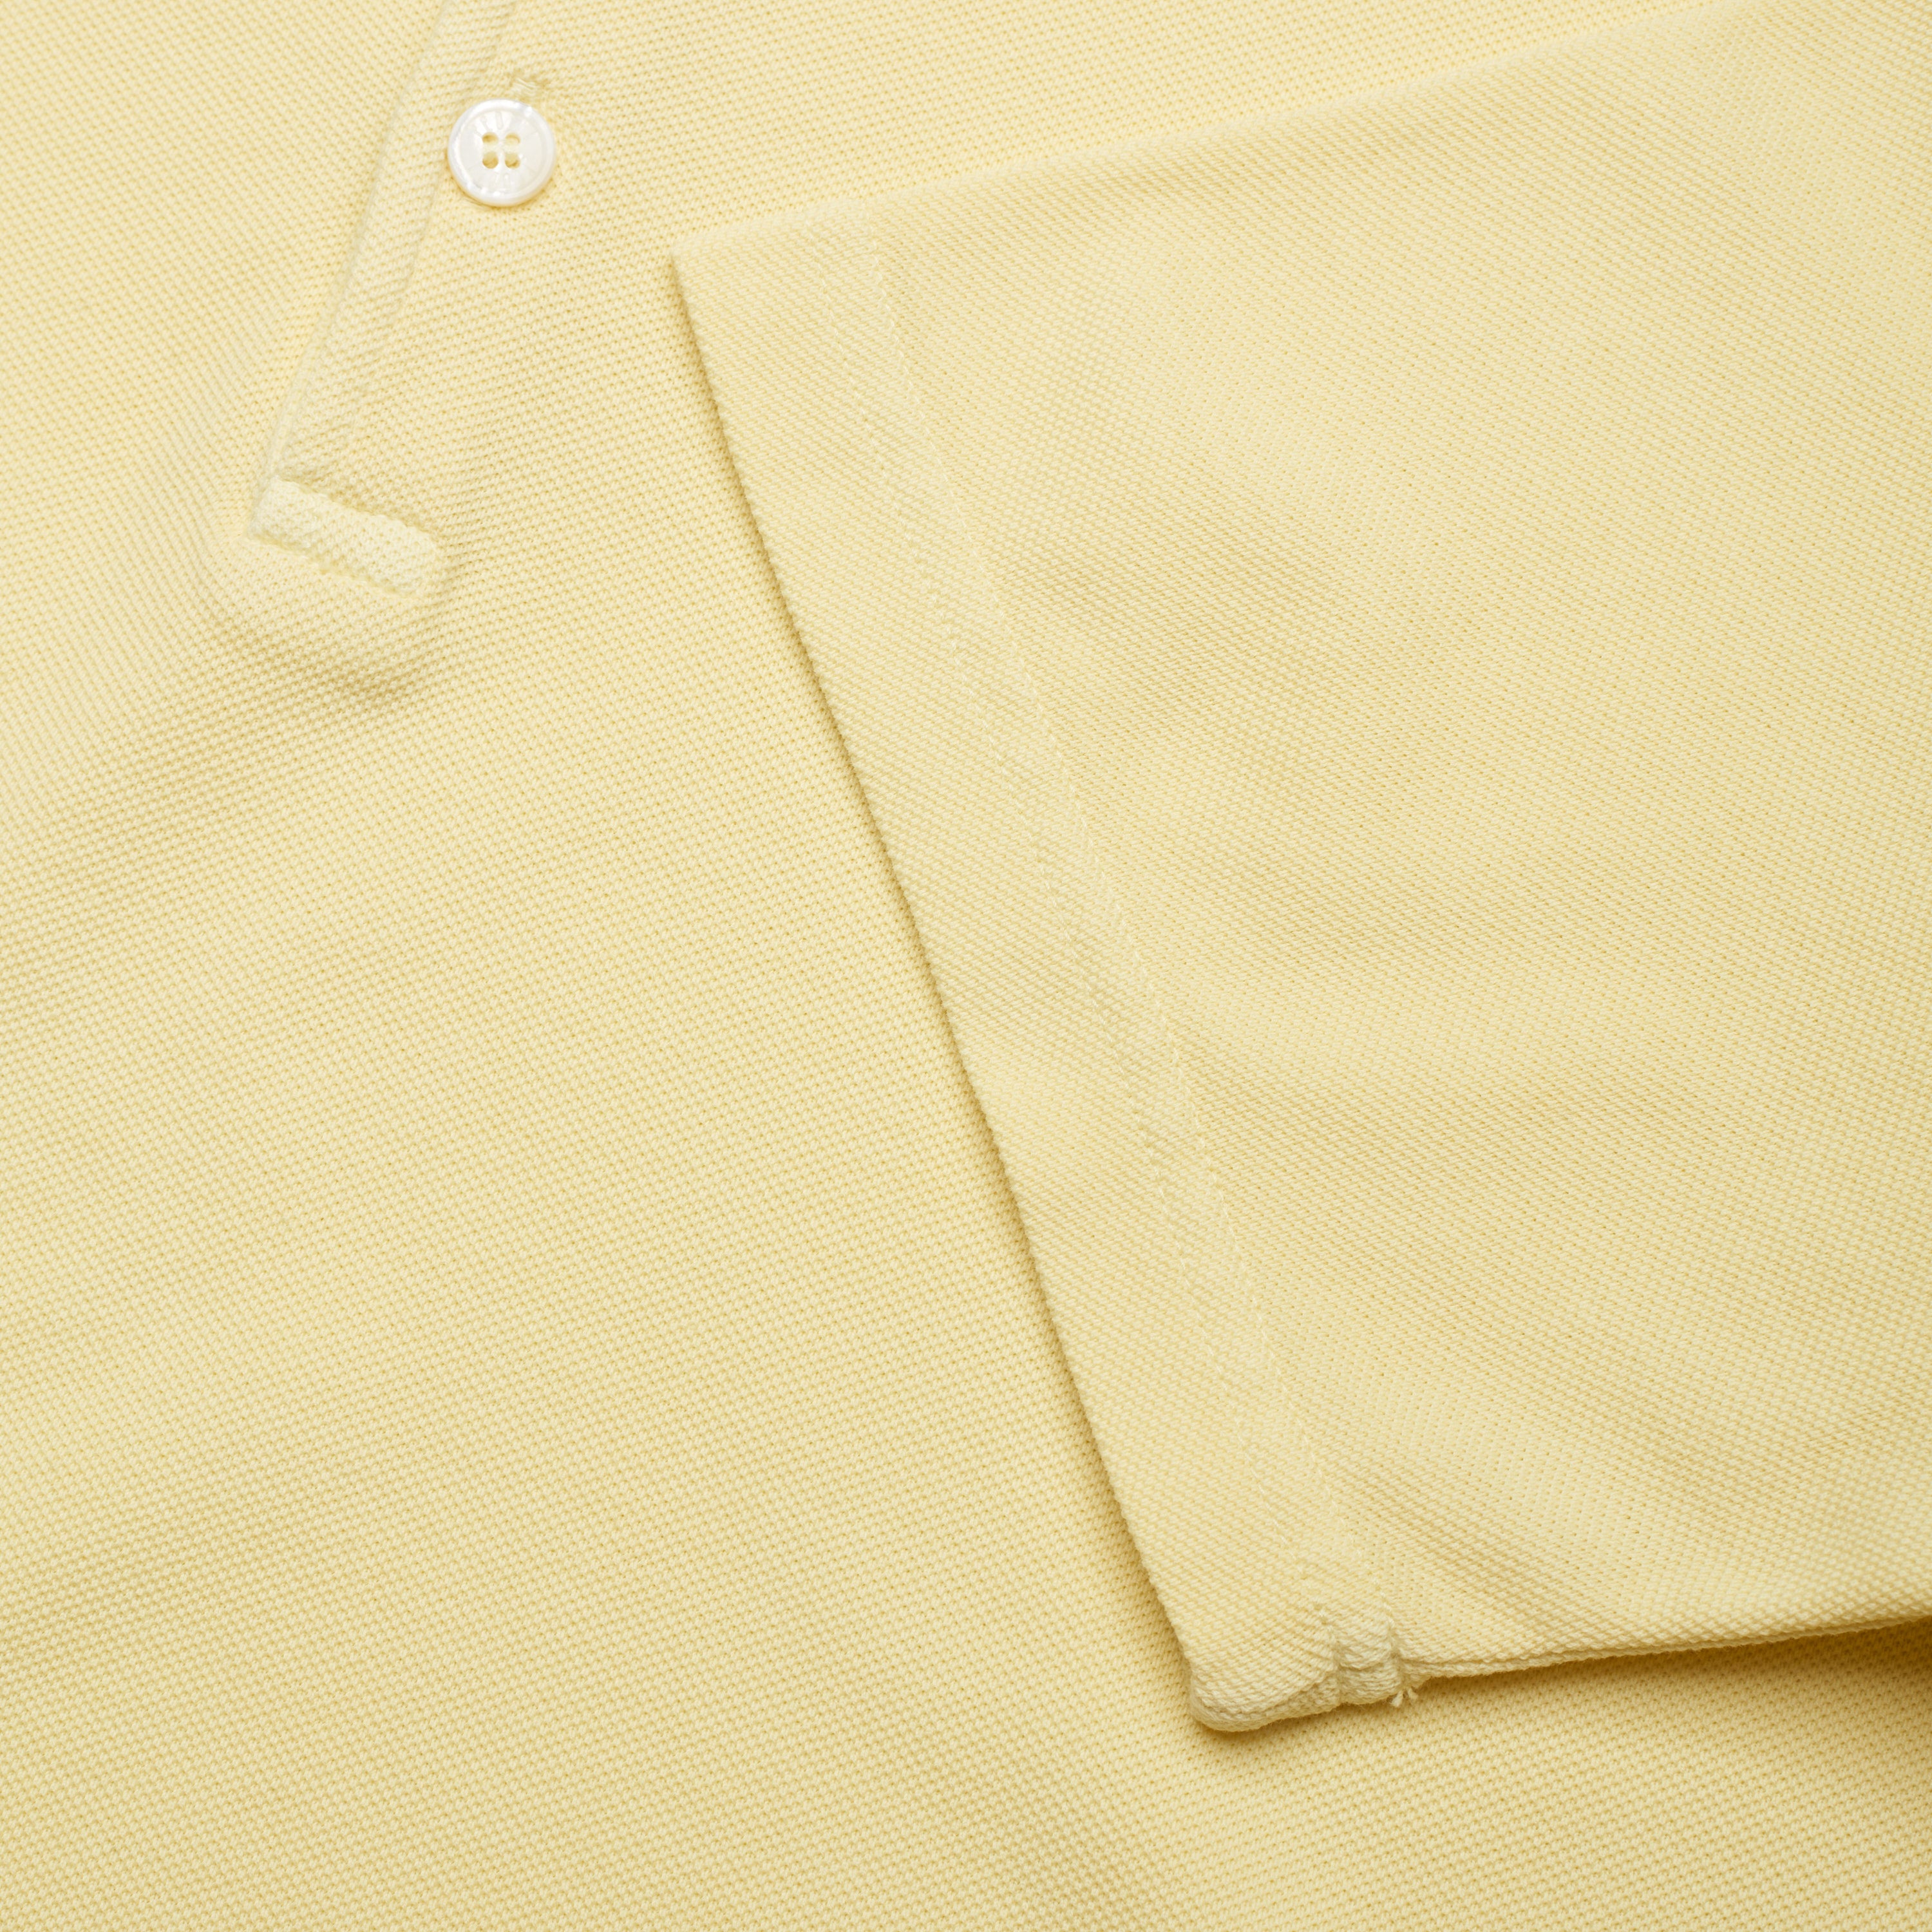 FEDELI "Tommy" Light Yellow Cotton Short Sleeve Pique Polo Shirt 48 NEW S Slim FEDELI